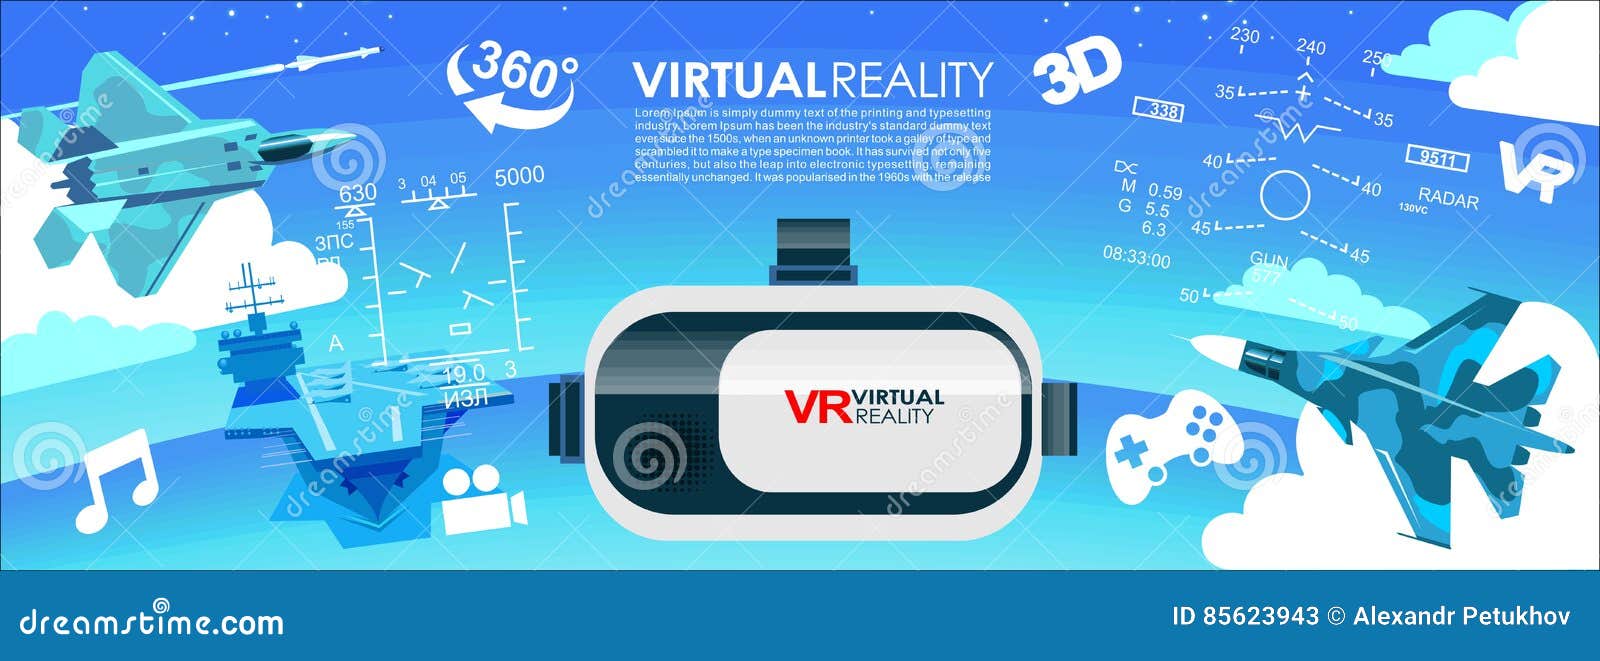 vr glasses 3d virtual reality icons